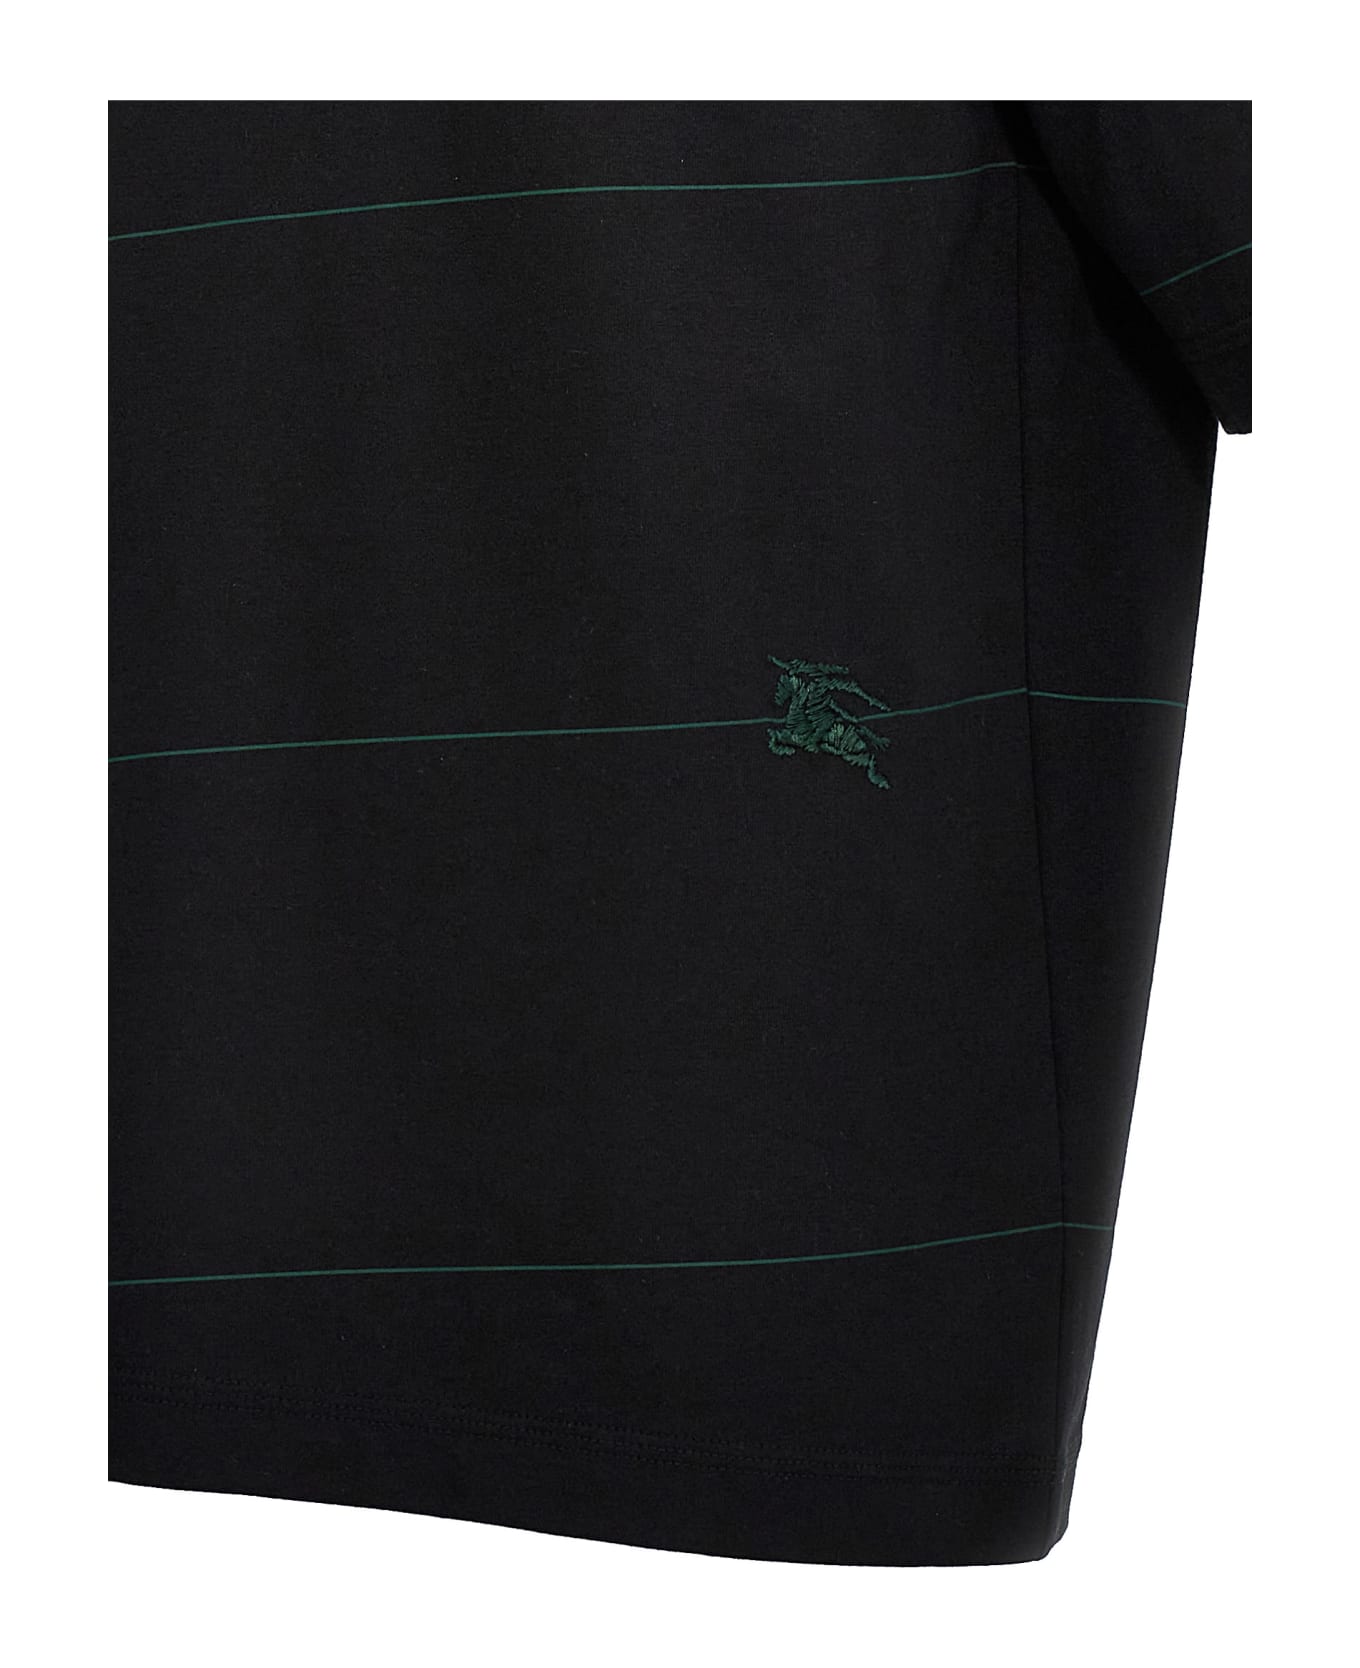 Burberry Logo Embroidery Striped T-shirt - Black